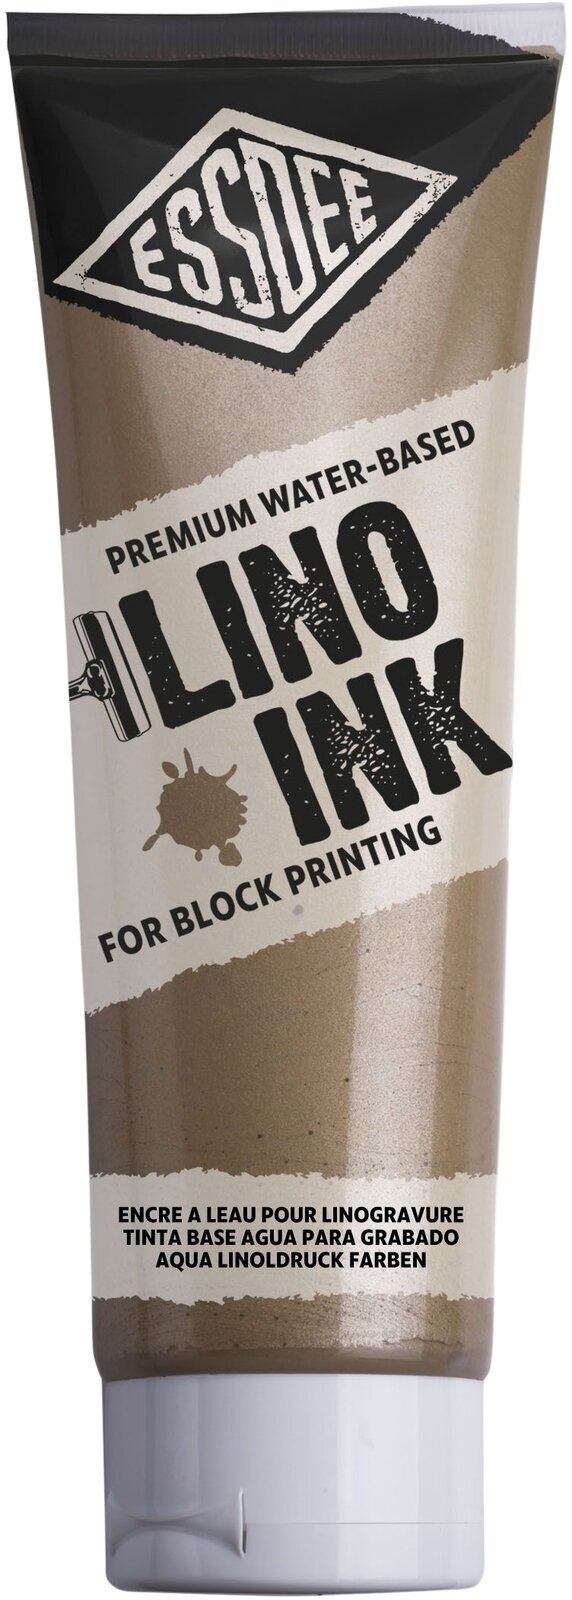 Farbe für Linolschnitt Essdee Block Printing Ink Farbe für Linolschnitt Metallic Gold 300 ml